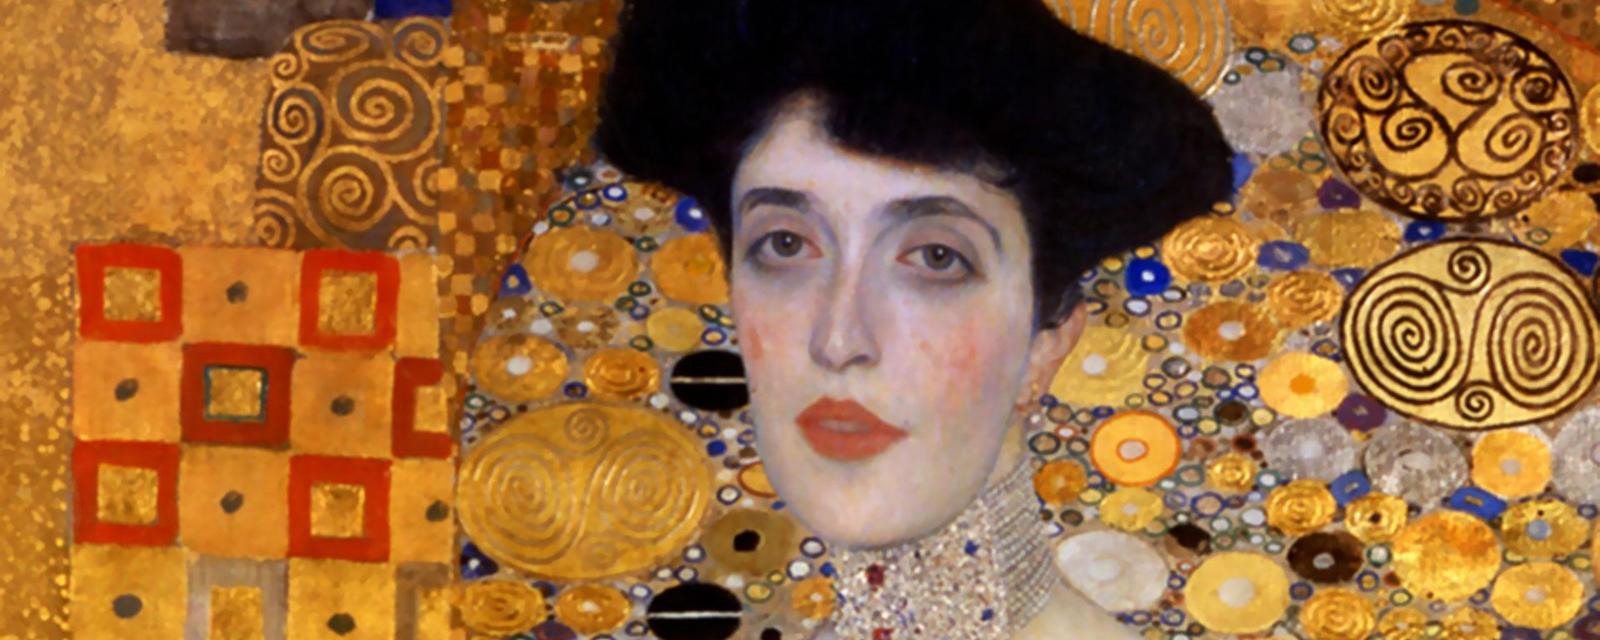 The mysterious muse of Gustav Klimt